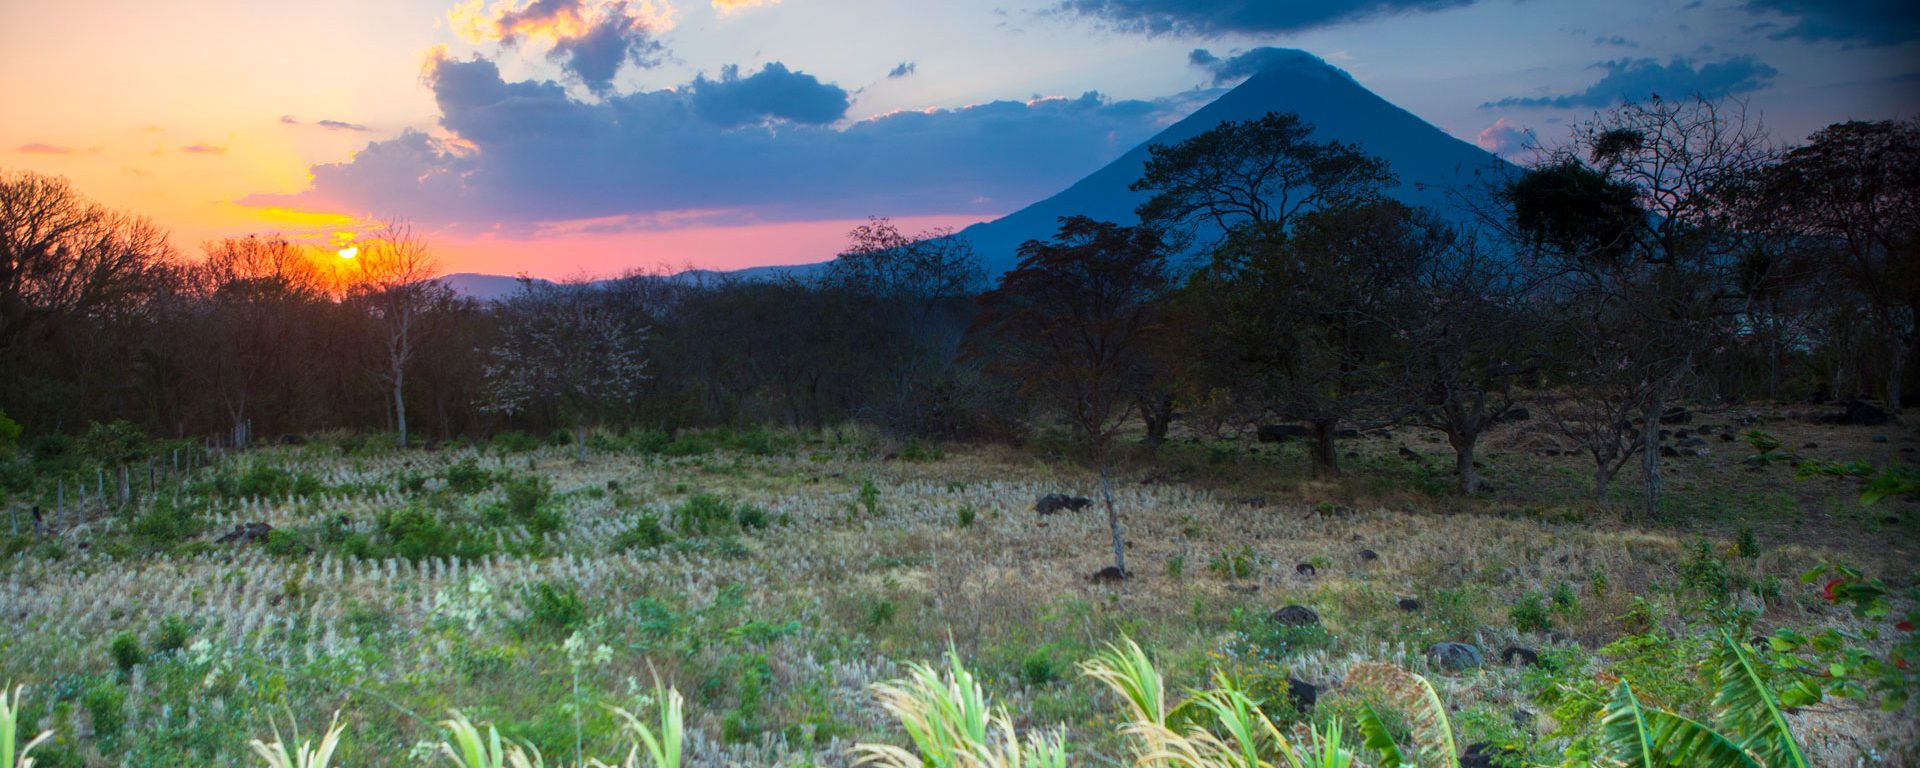 Sunset falls behind the Concepcion volcano on the Isla de Omatepe, Nicaragua